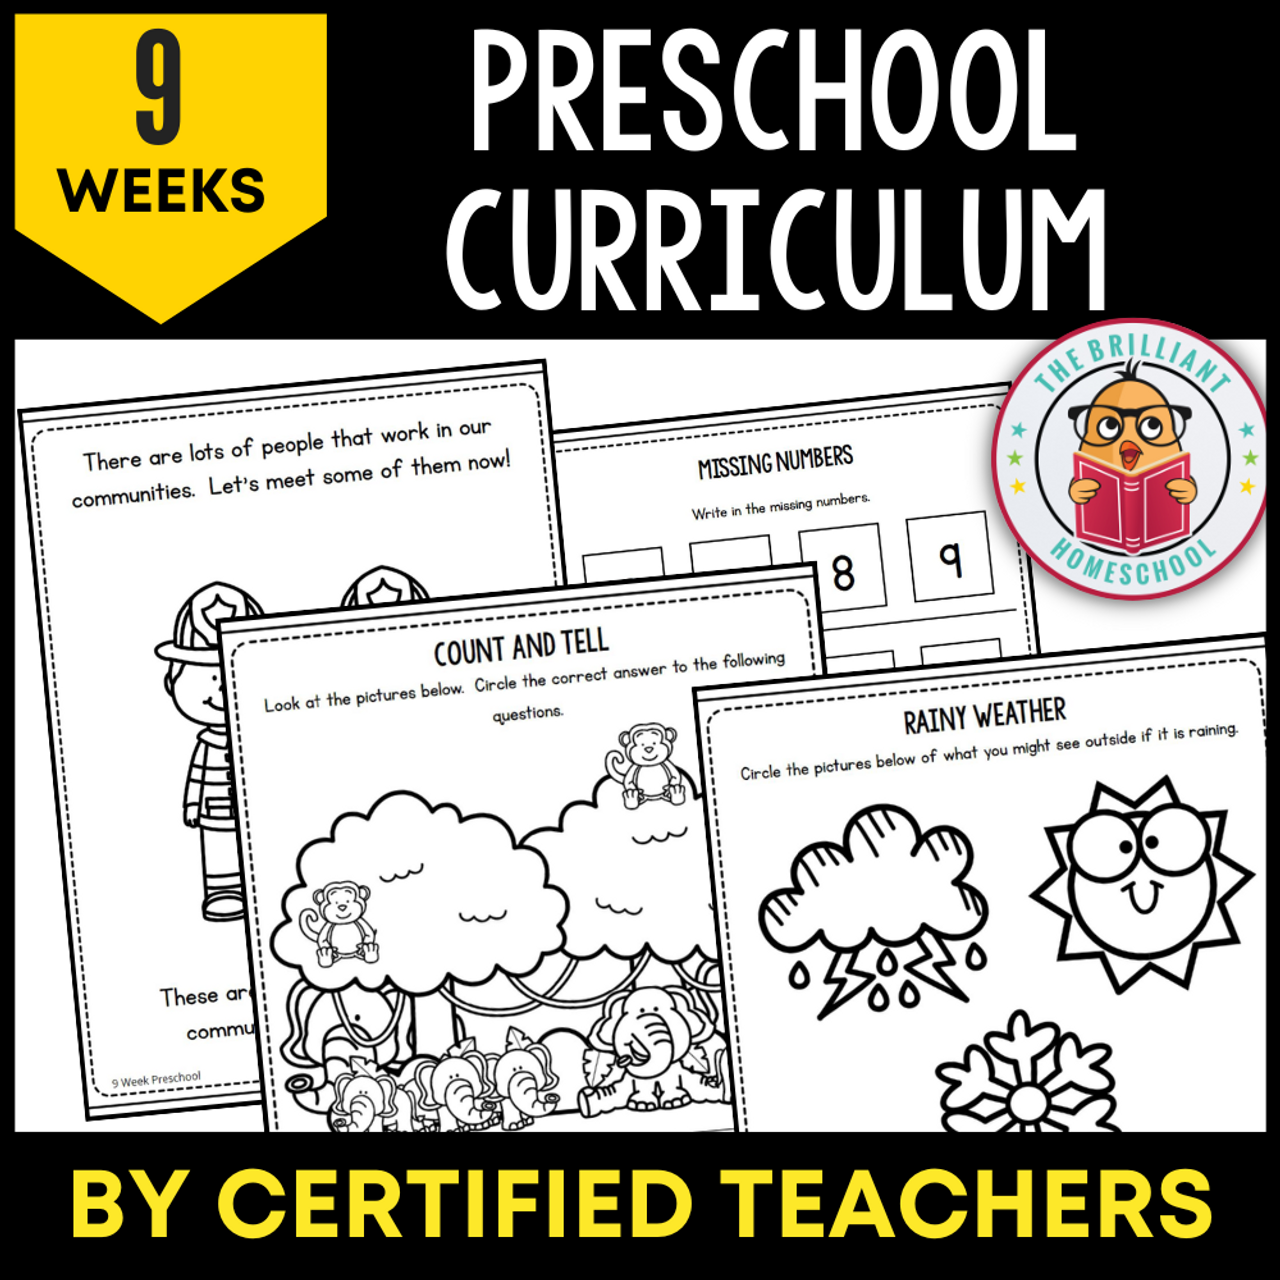 Preschool Curriculum - 9 Week Program - DIGITAL COPY